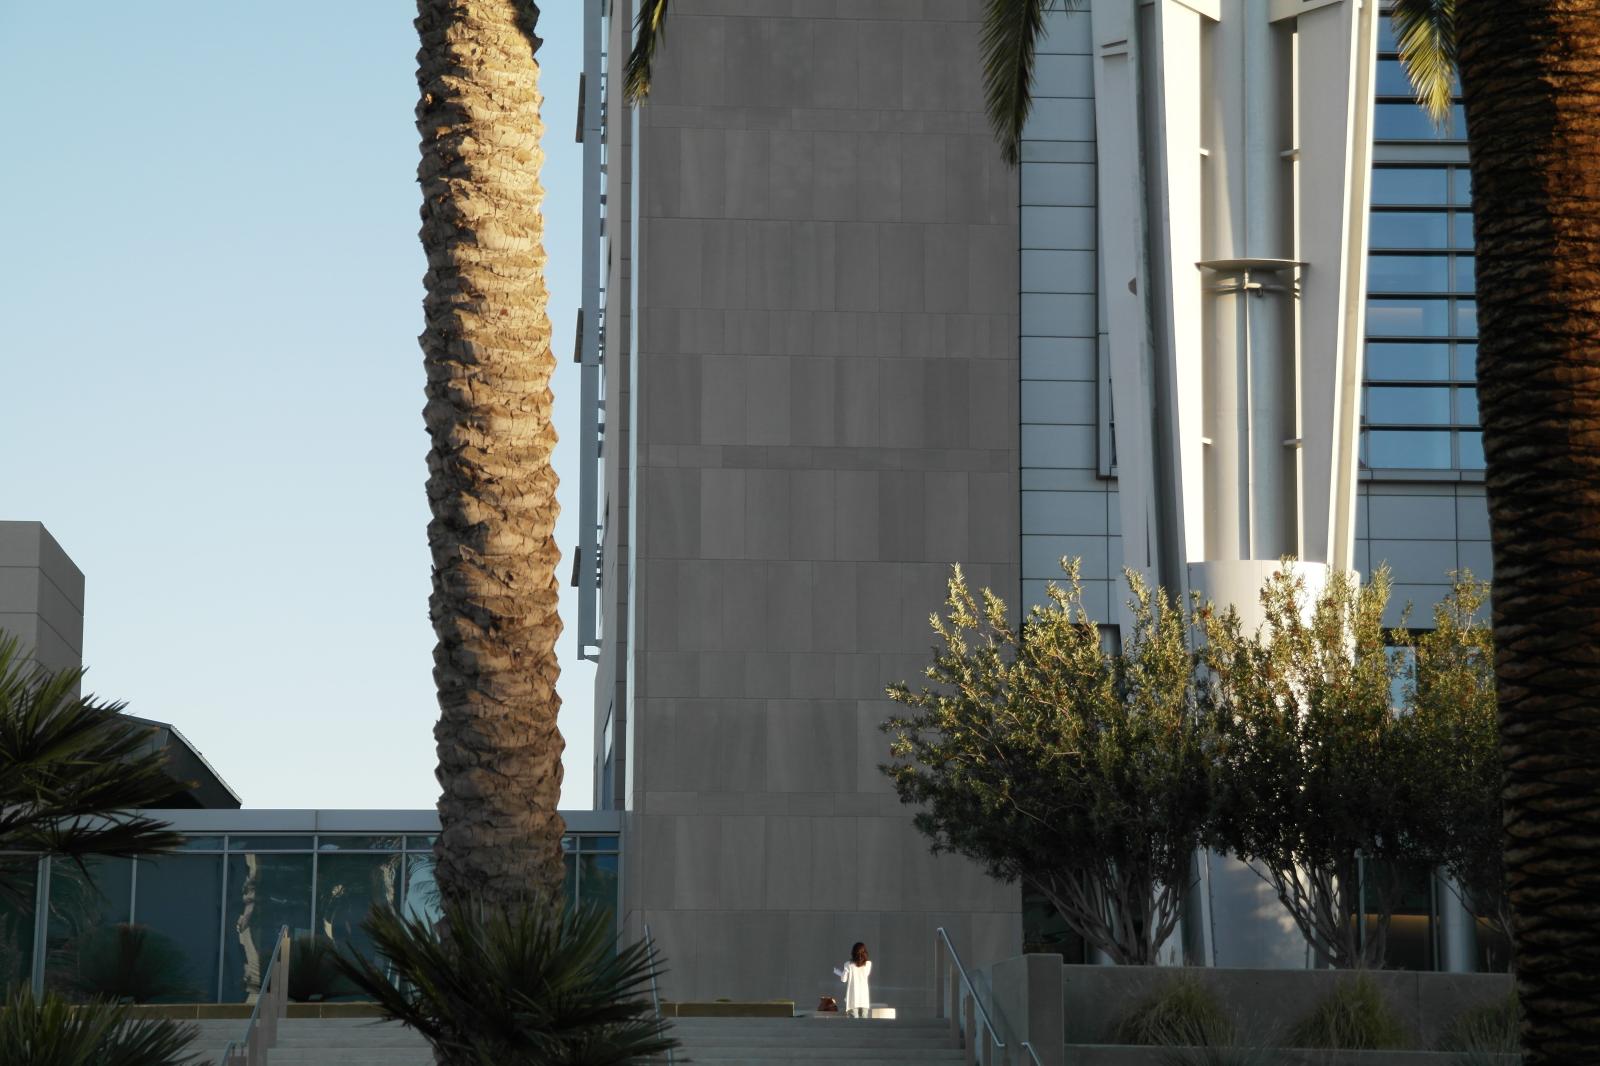 Federal Building, Las Vegas | Buy this image